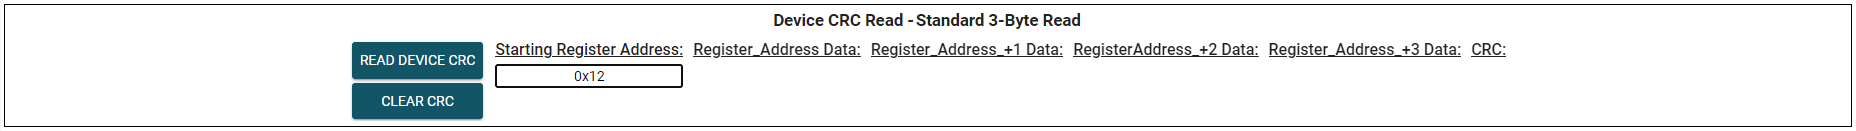 TMAG3001EVM Device CRC Read - Starting
                  Register Address